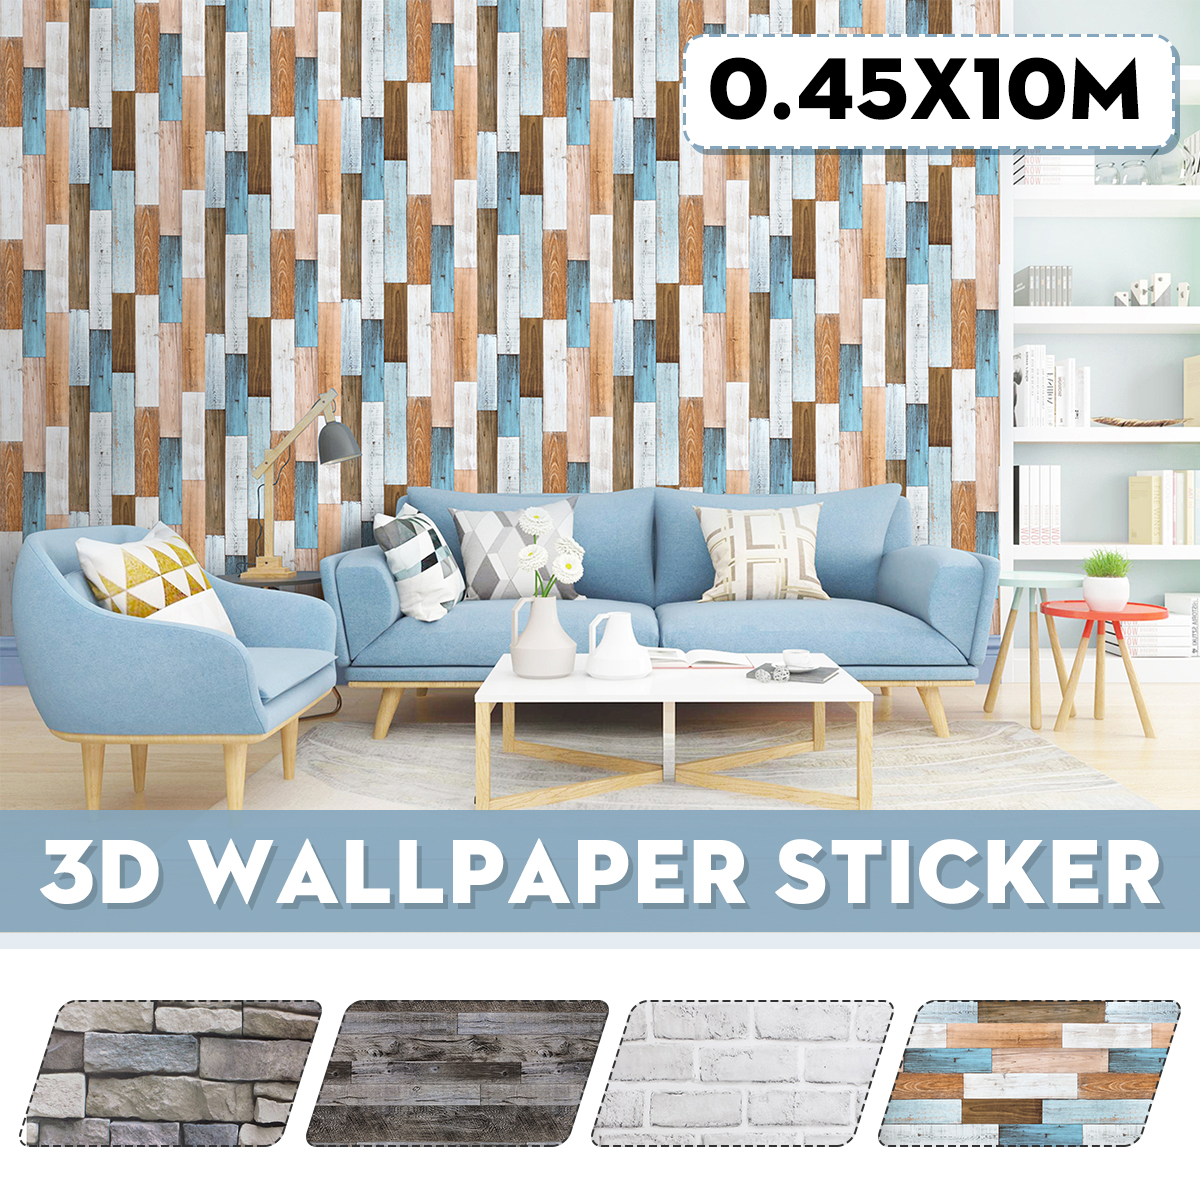 10M-Retro-Brick-Wallpaper-Wall-Sticker-Smooth-Waterproof-PVC-Self-Adhesive-Decoration-1811985-1